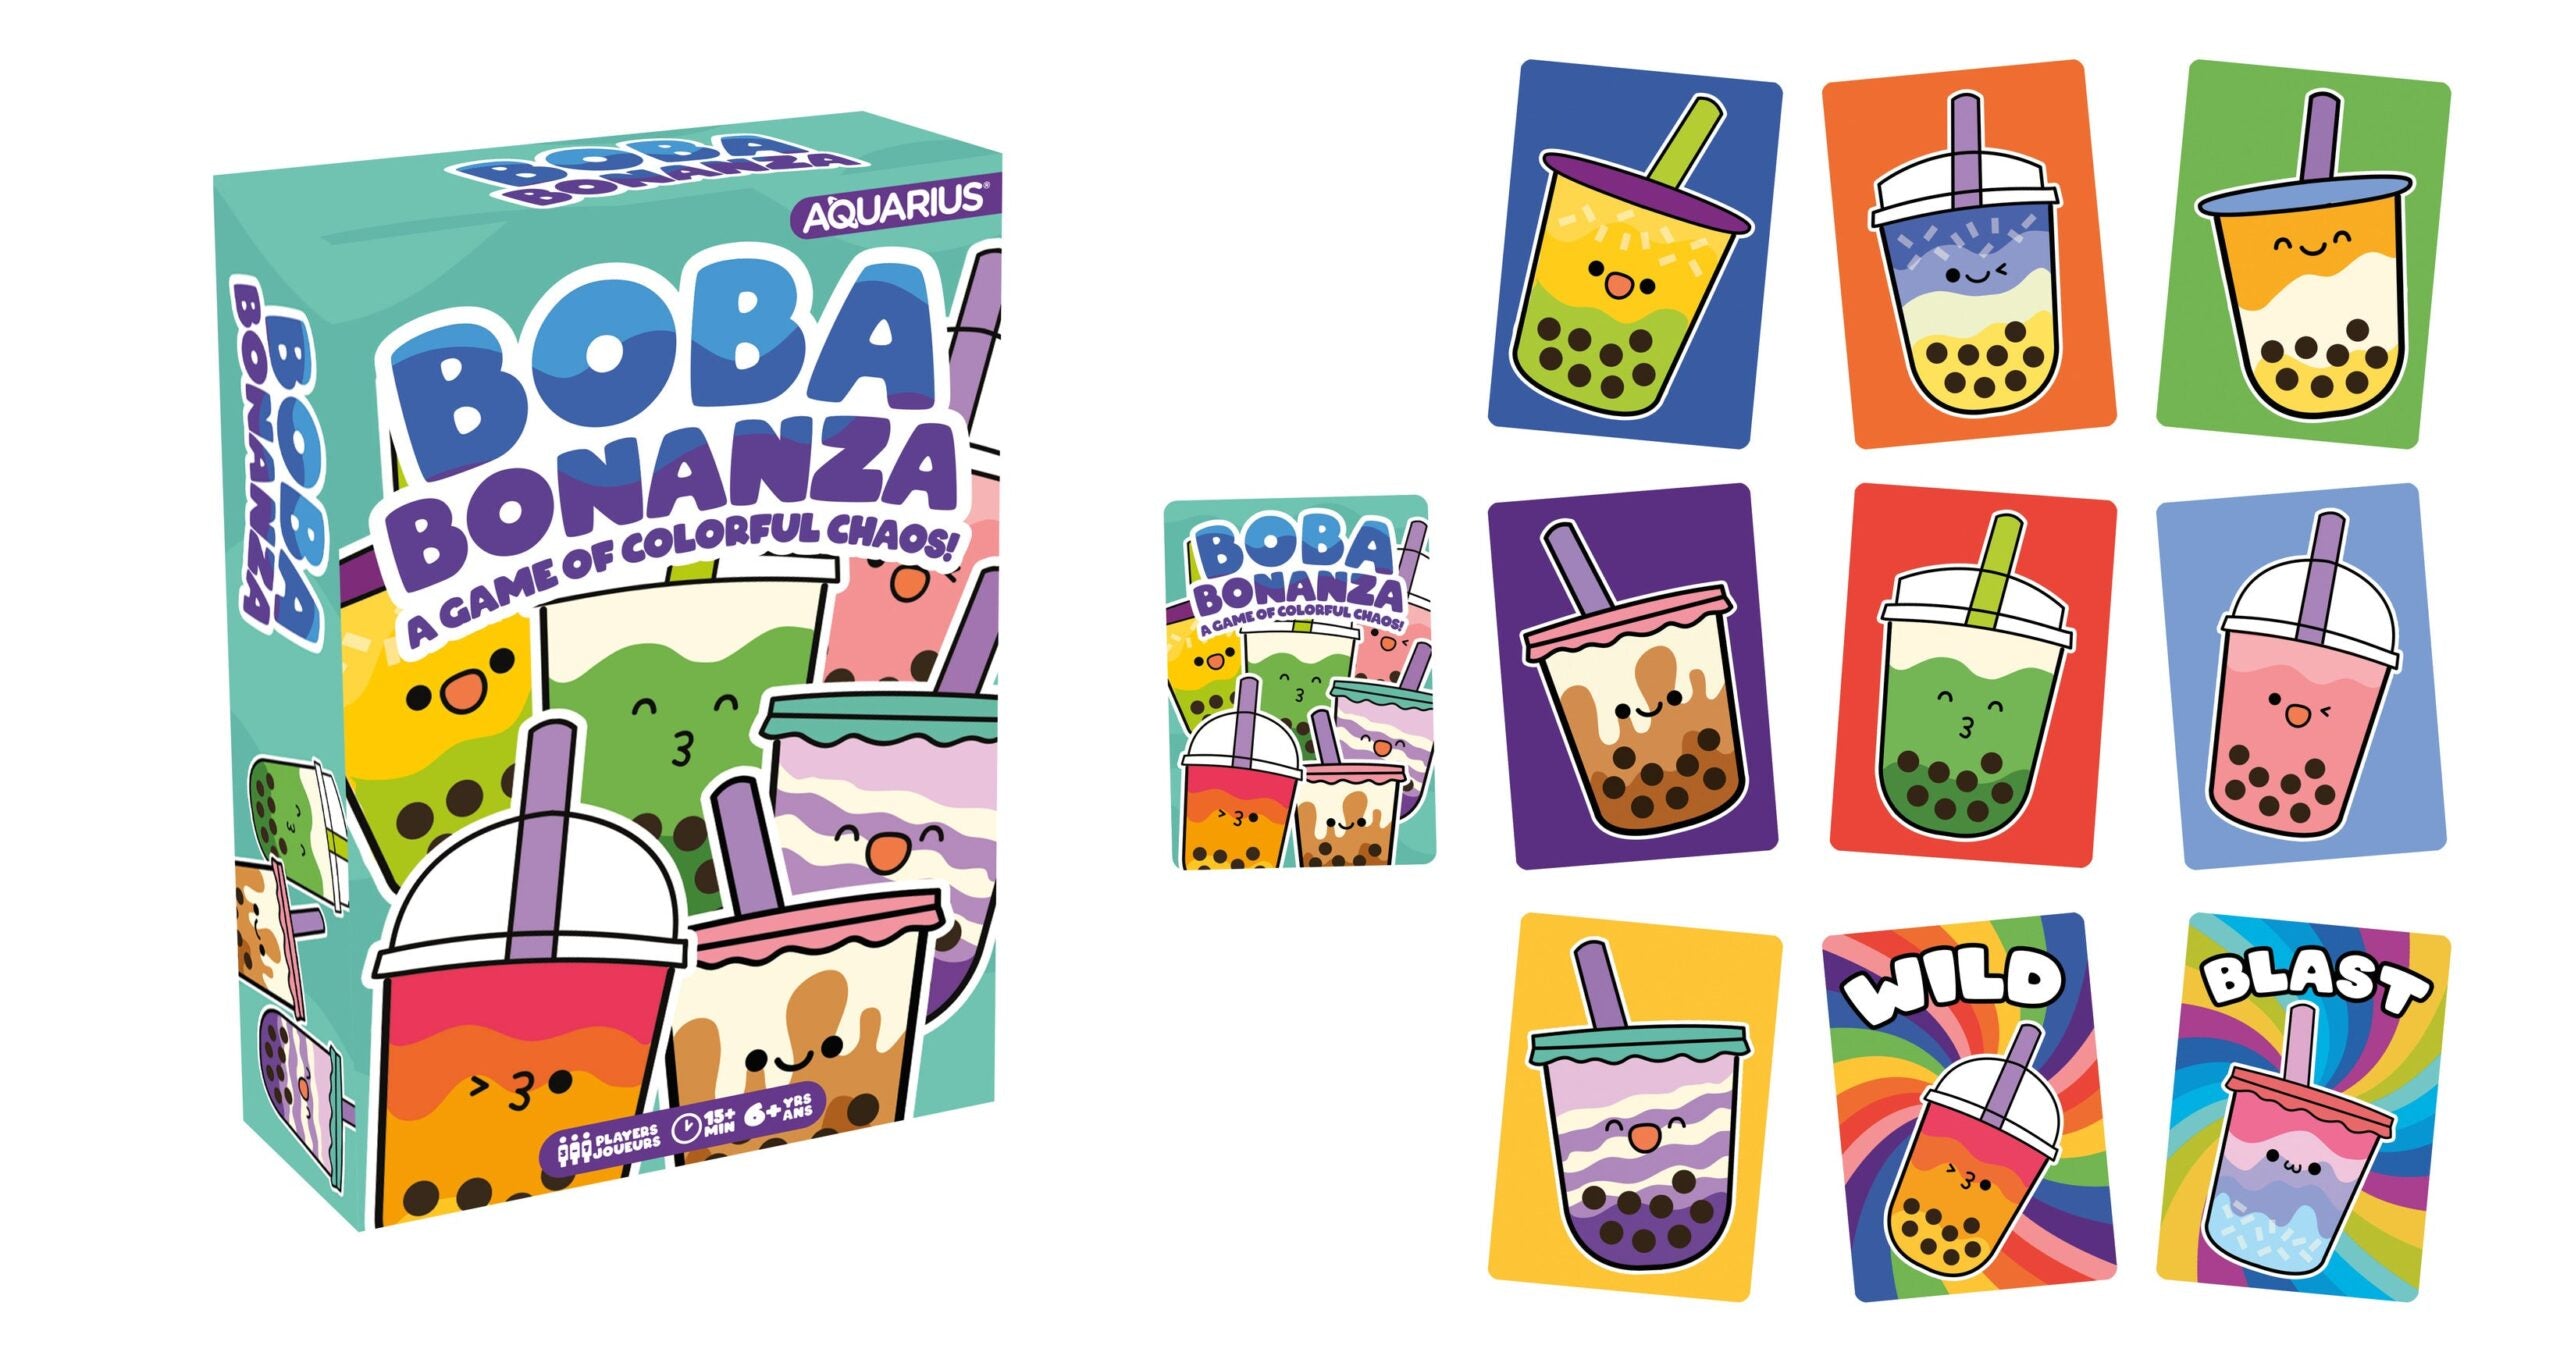 Boba Bonanza | A Game of Colorful Chaos